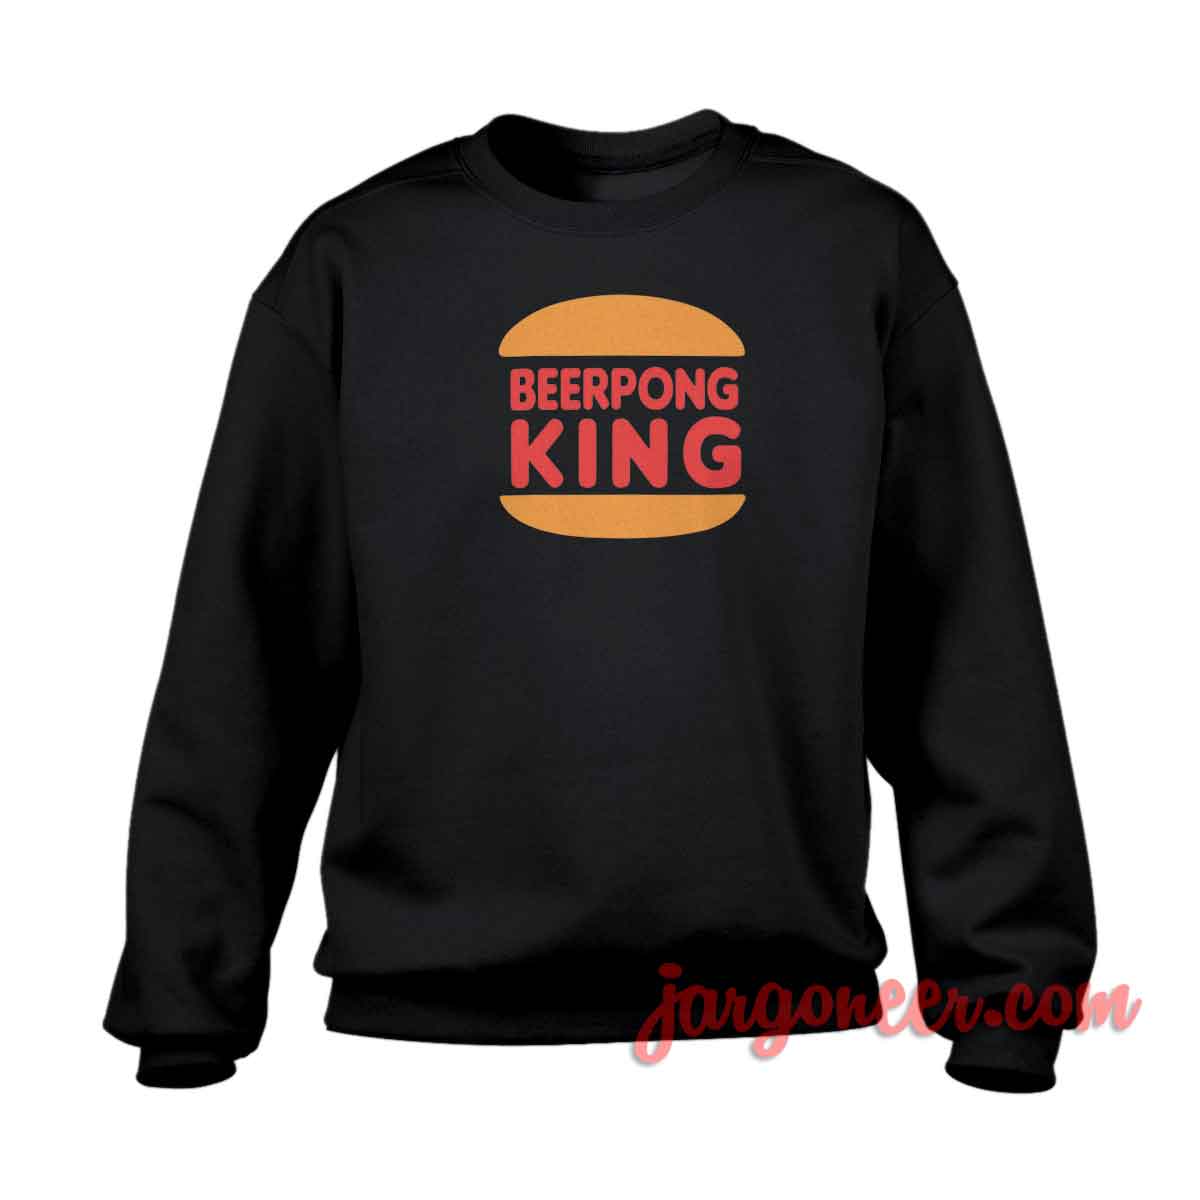 Beerpong King 1 - Shop Unique Graphic Cool Shirt Designs